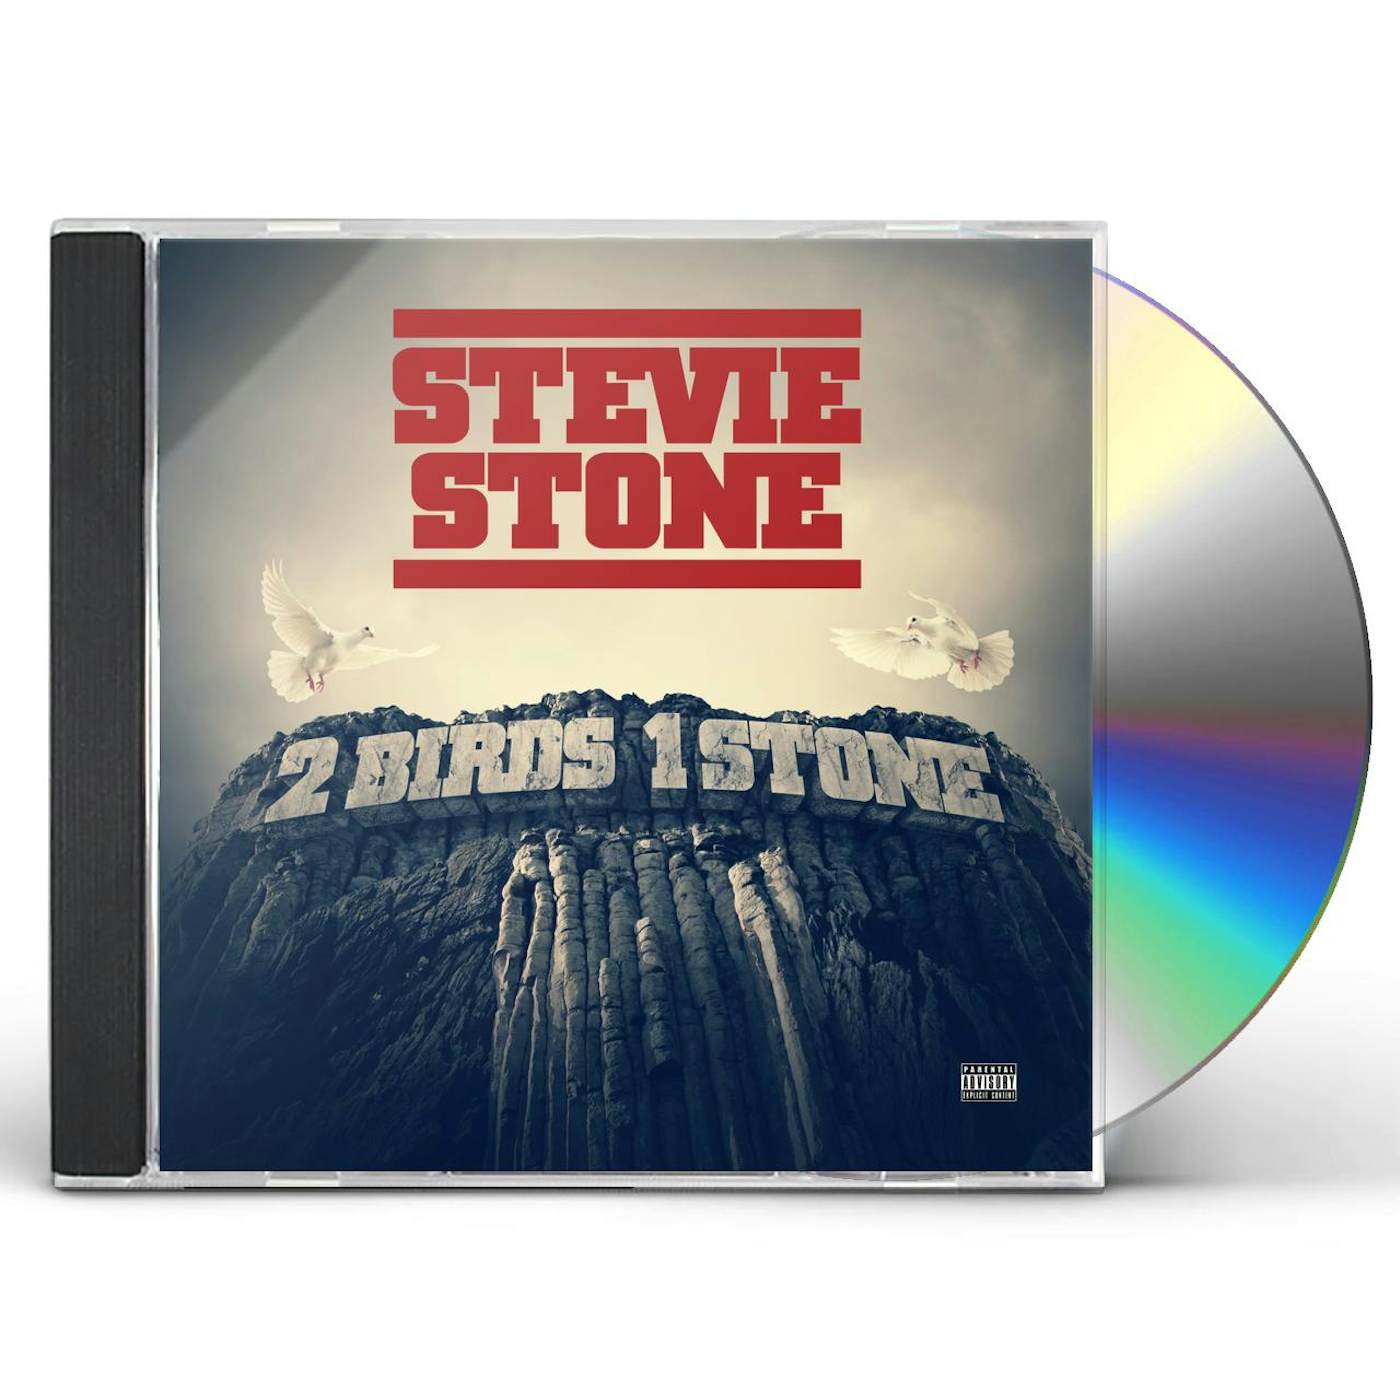 Stevie Stone 2 BIRDS 1 STONE CD